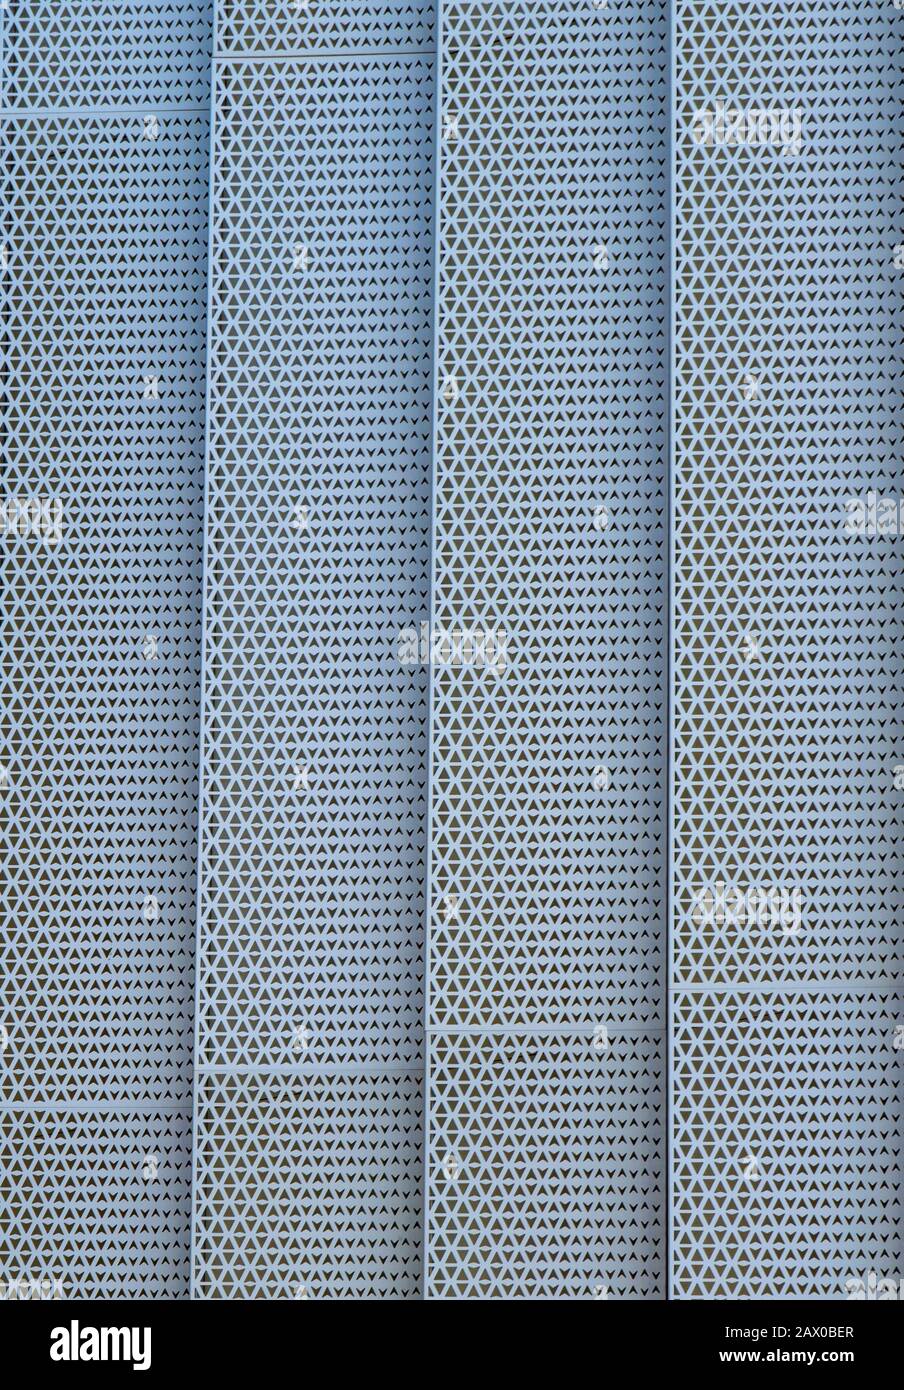 Mesh lattice wall cladding. Stock Photo